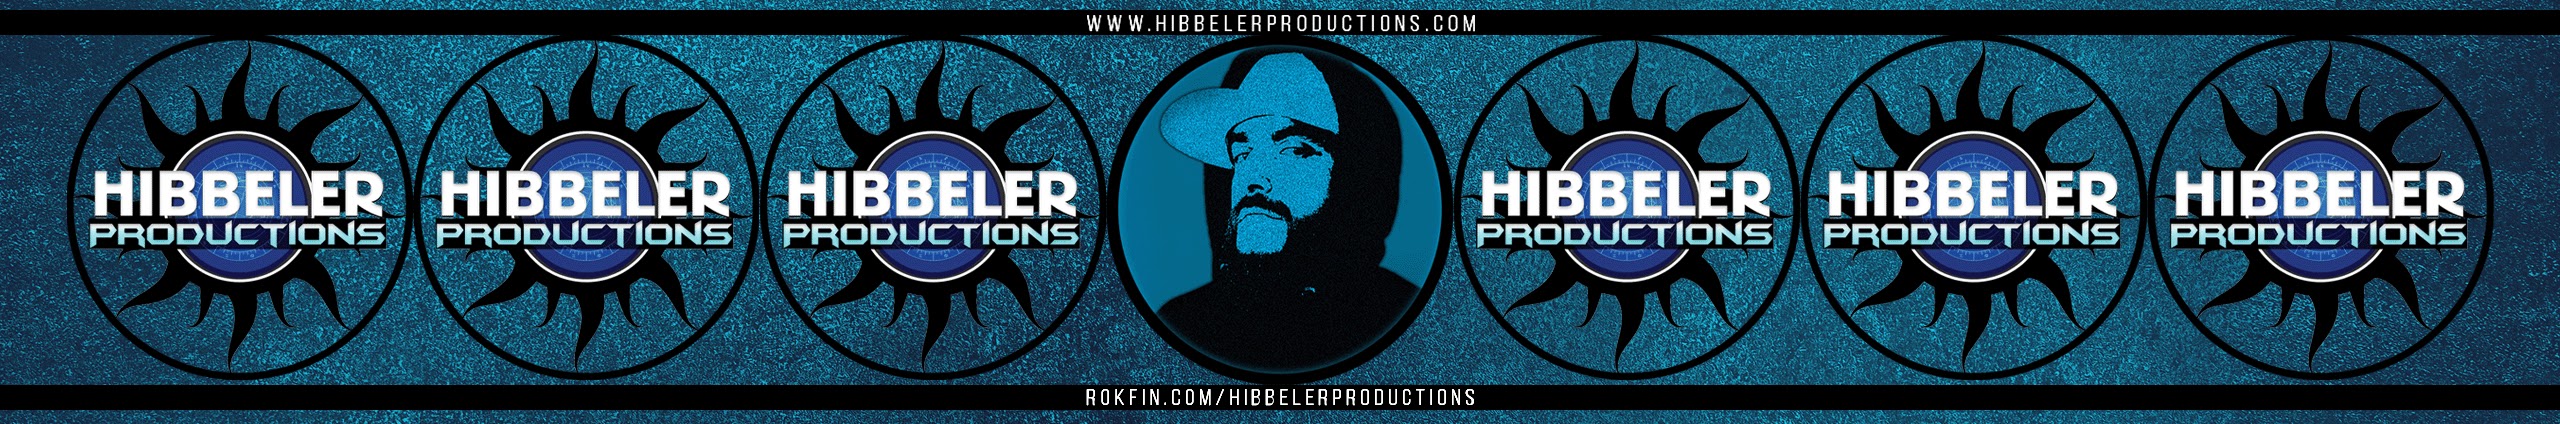 Hibbeler Productions banner